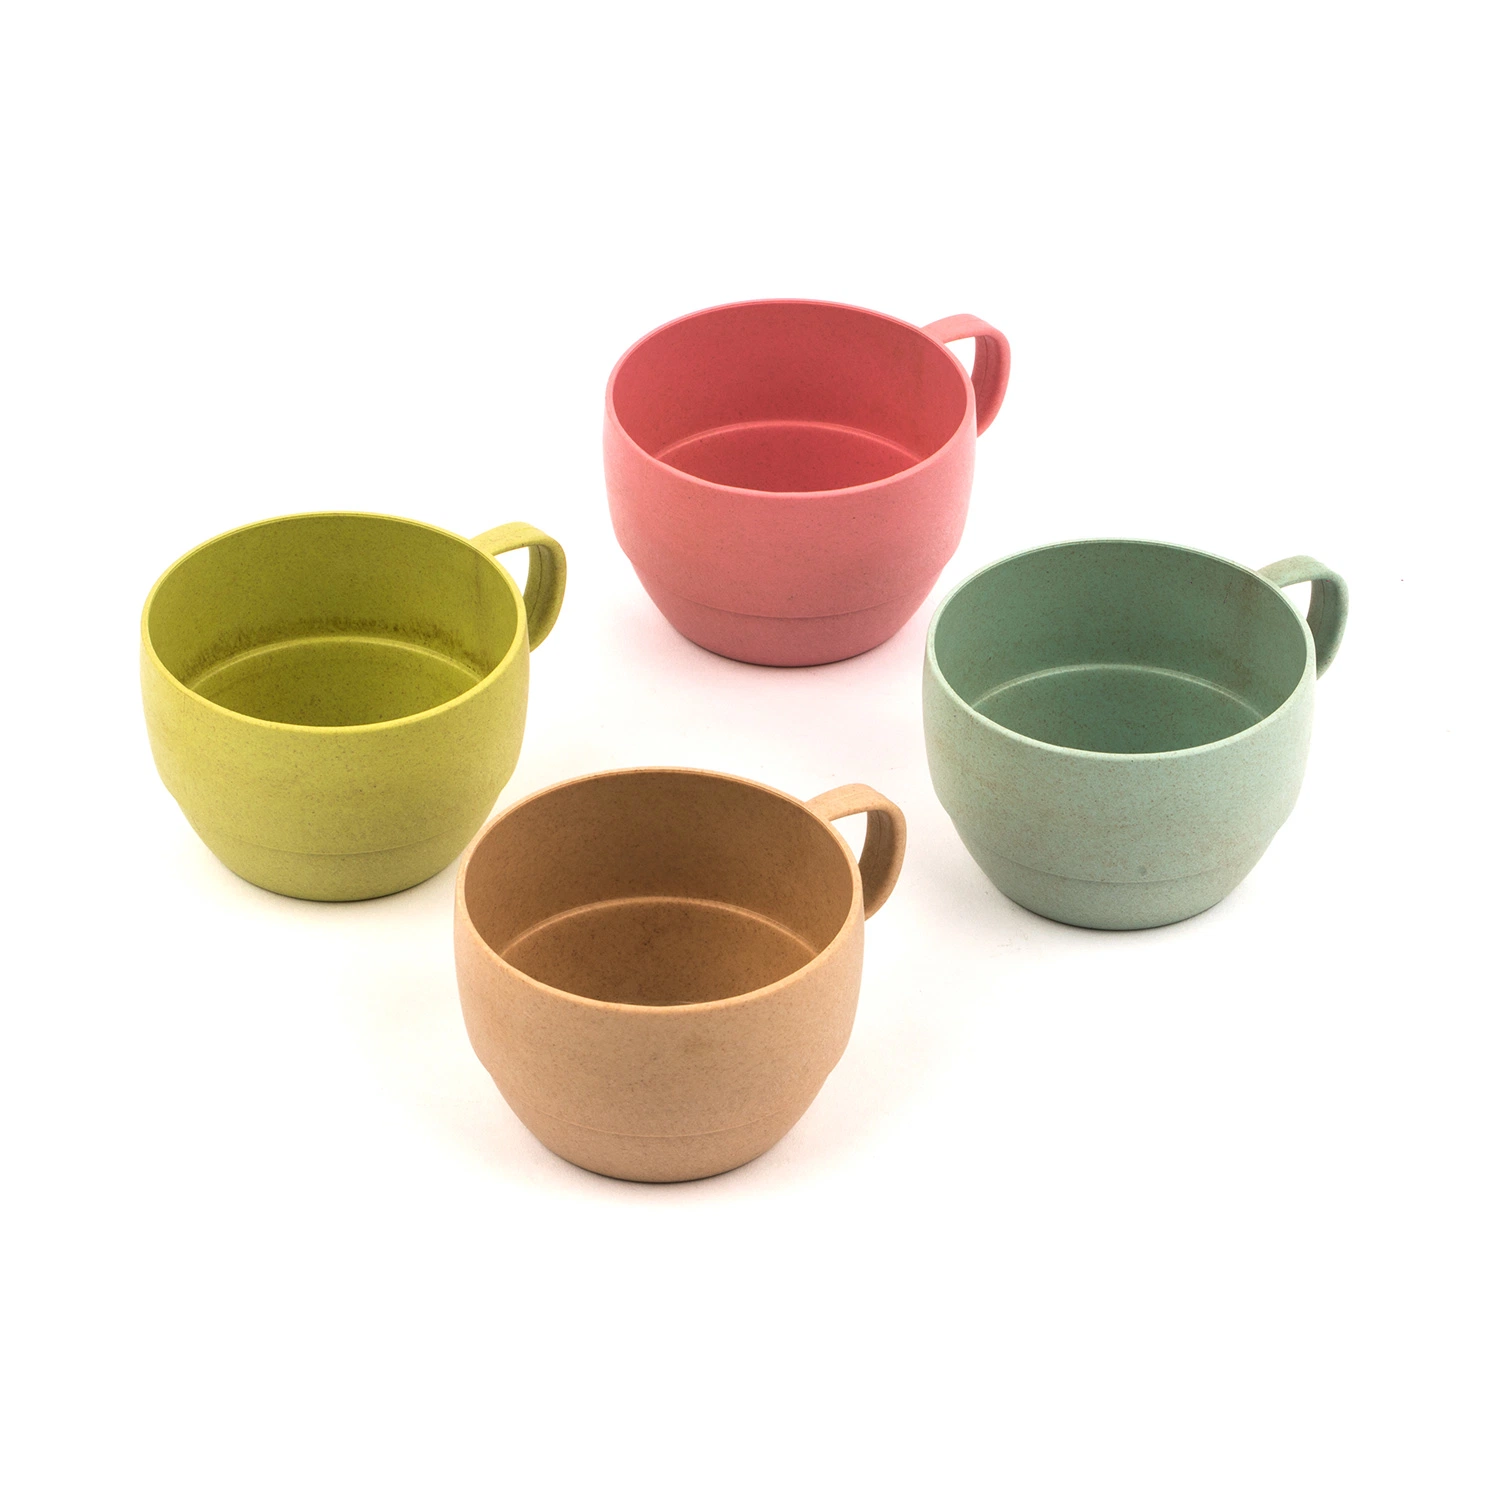 Plastic Coffee Mugs Cups Set with Bonus Jug, Handle Mugs for Cocoa, Tea, Coffee (4 Mugs Set)